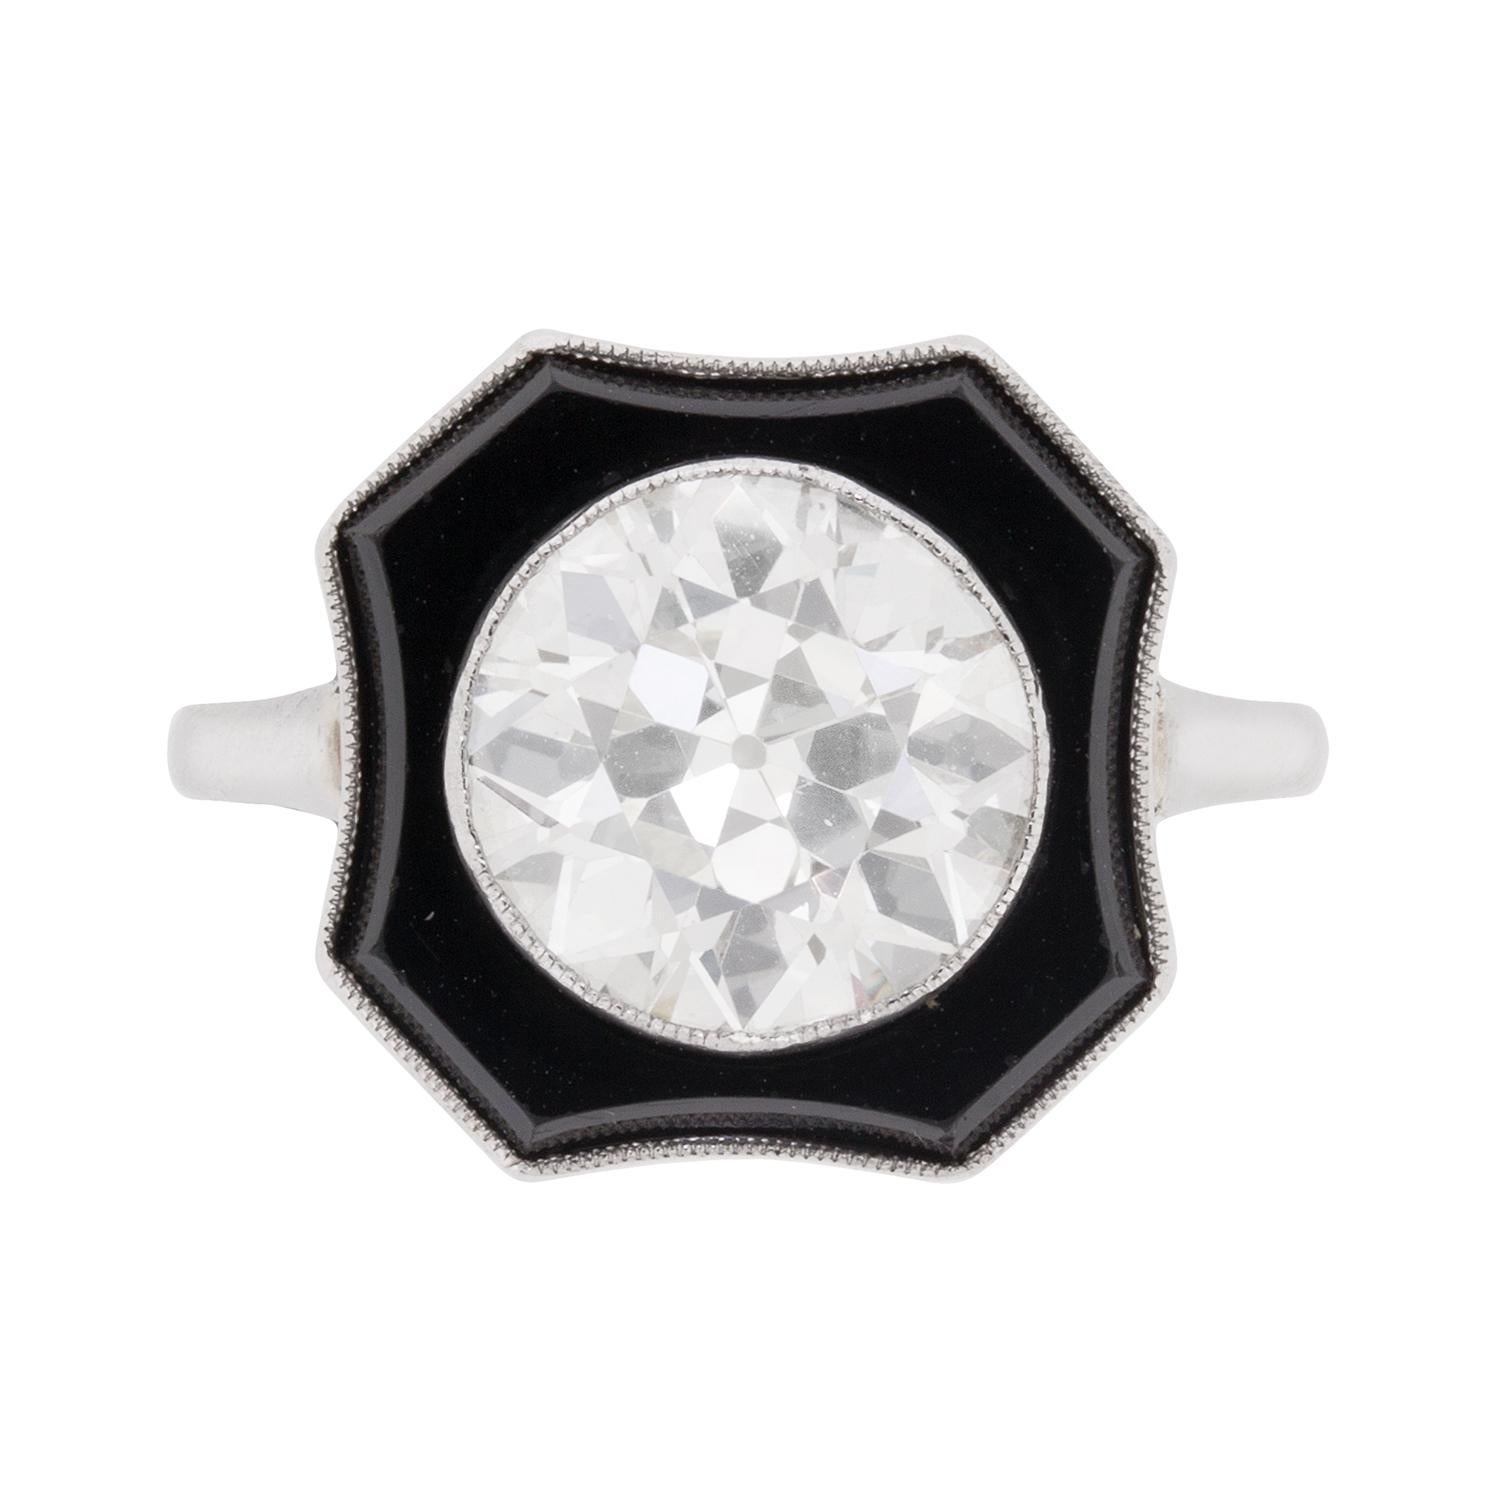 Art Deco 3.30 Carat Diamond and Onyx Ring, circa 1920s